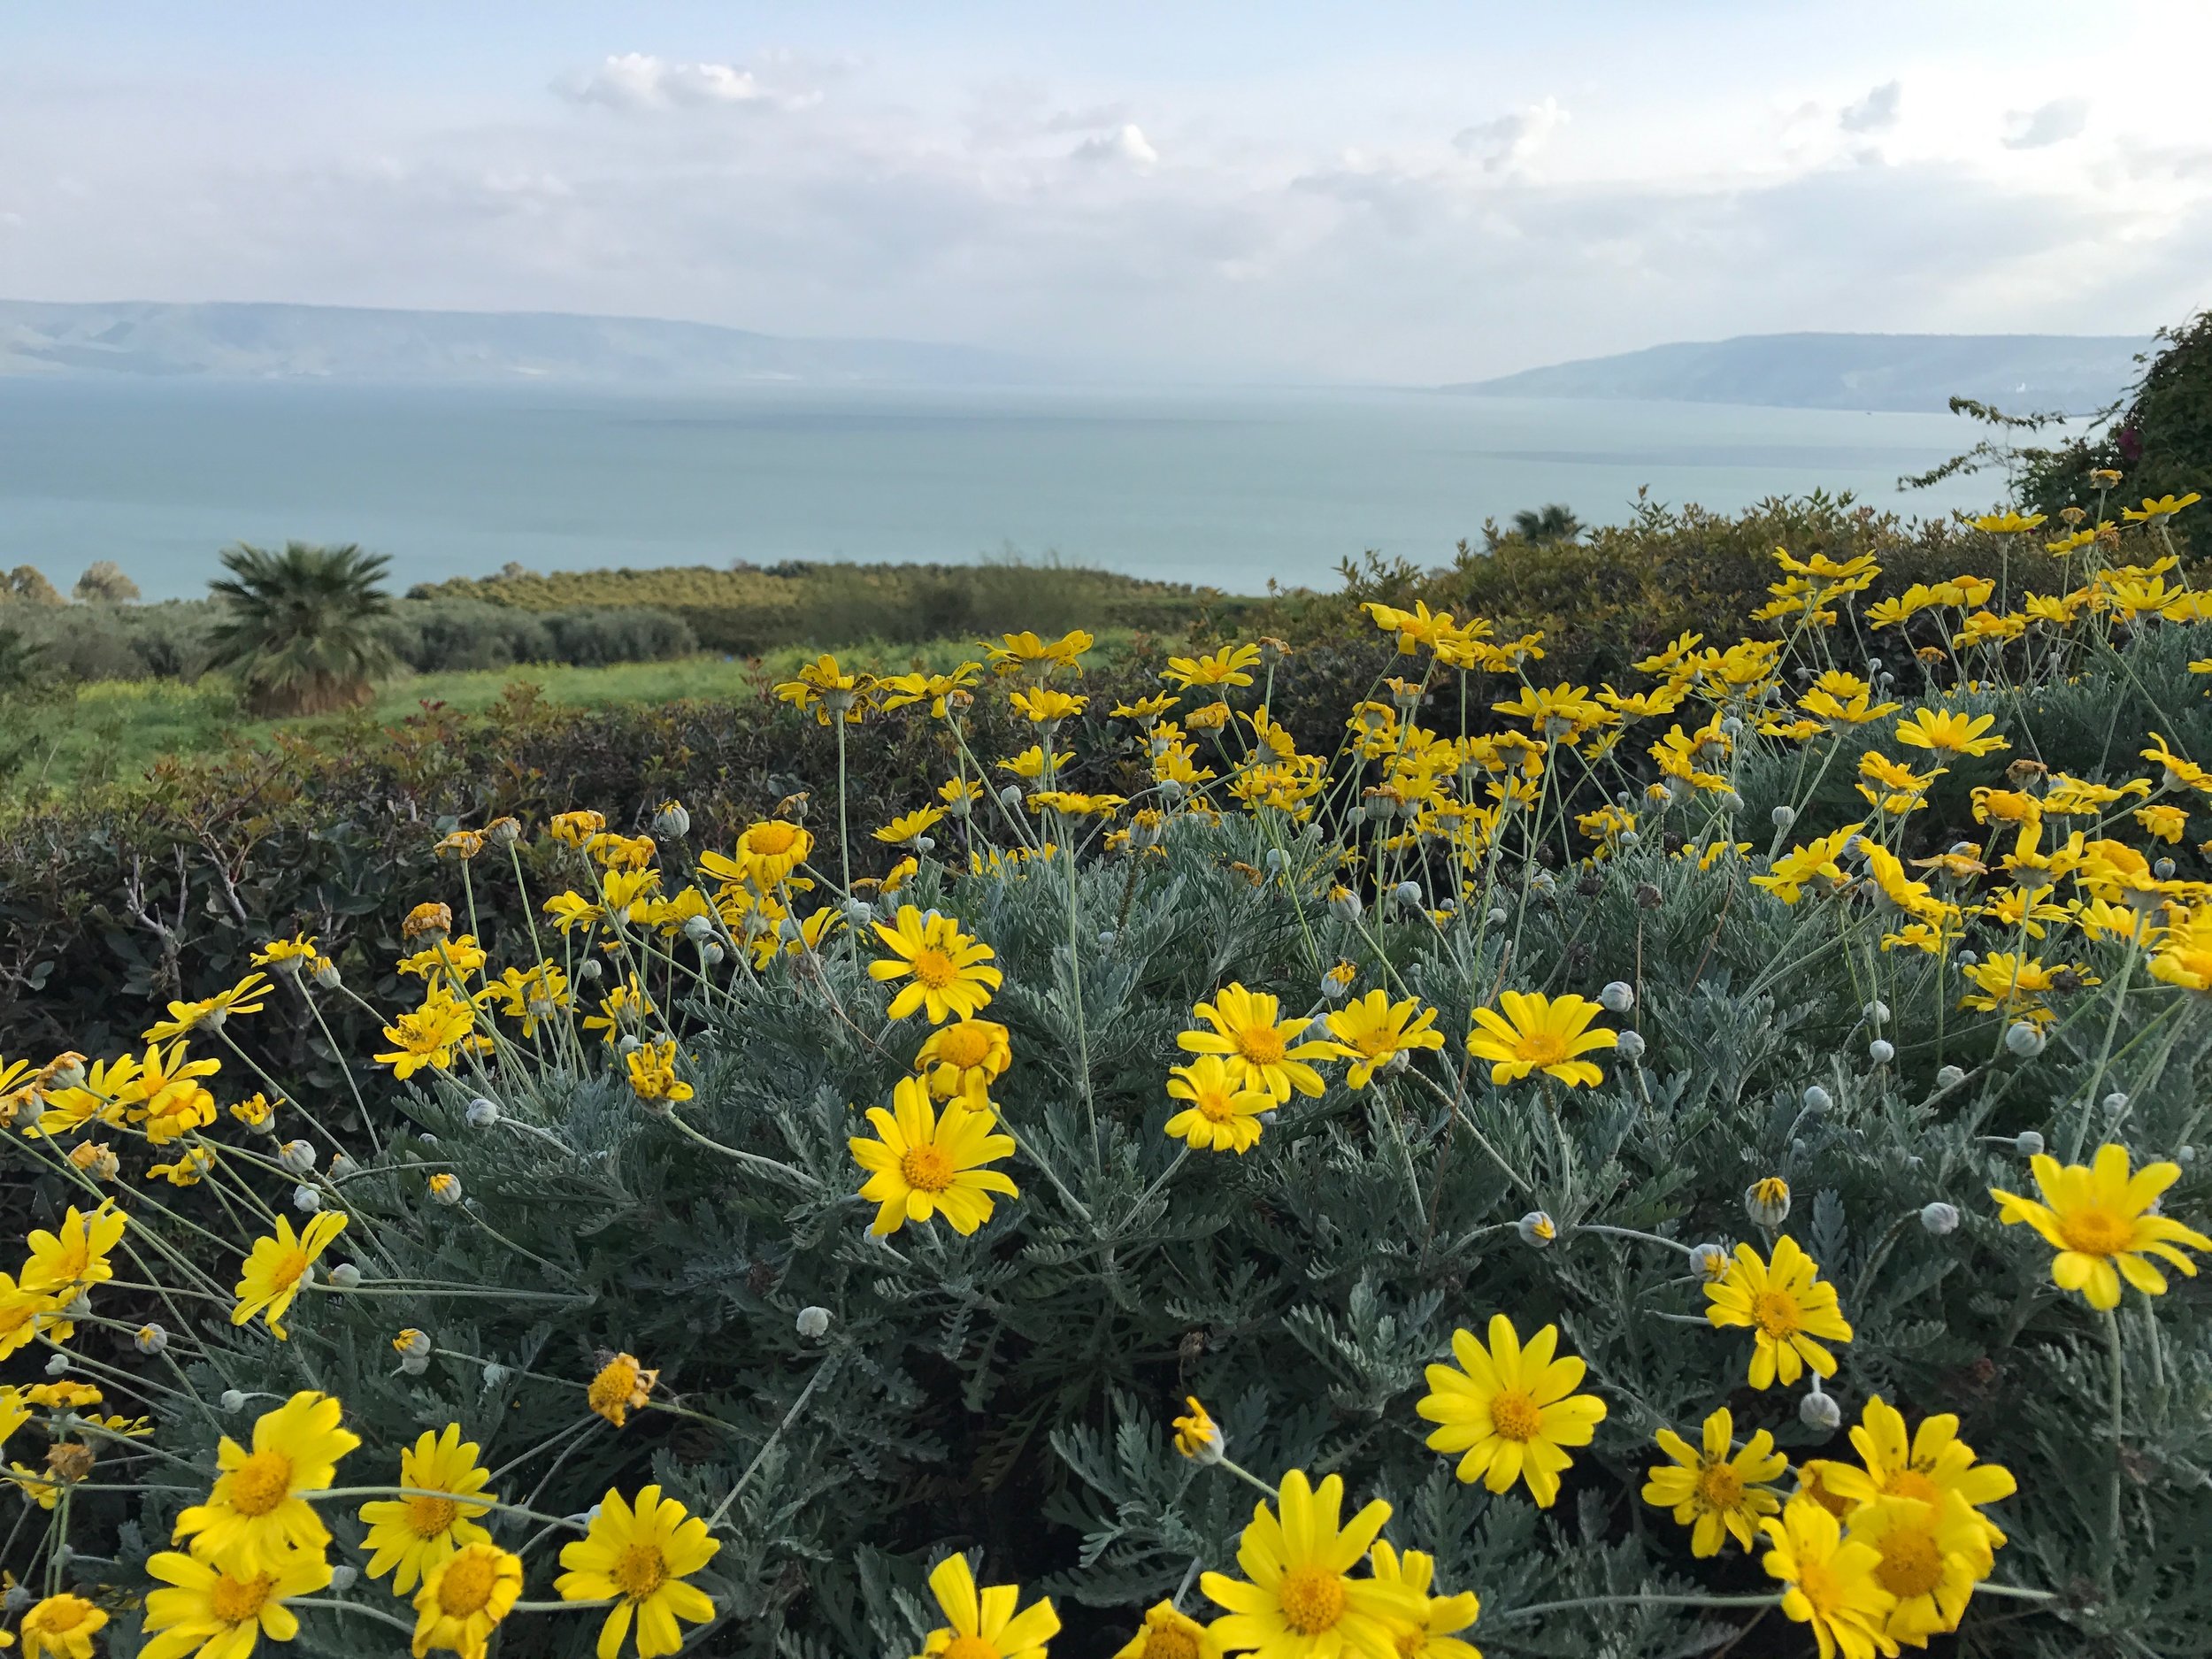 The Sea of ​​Galilee